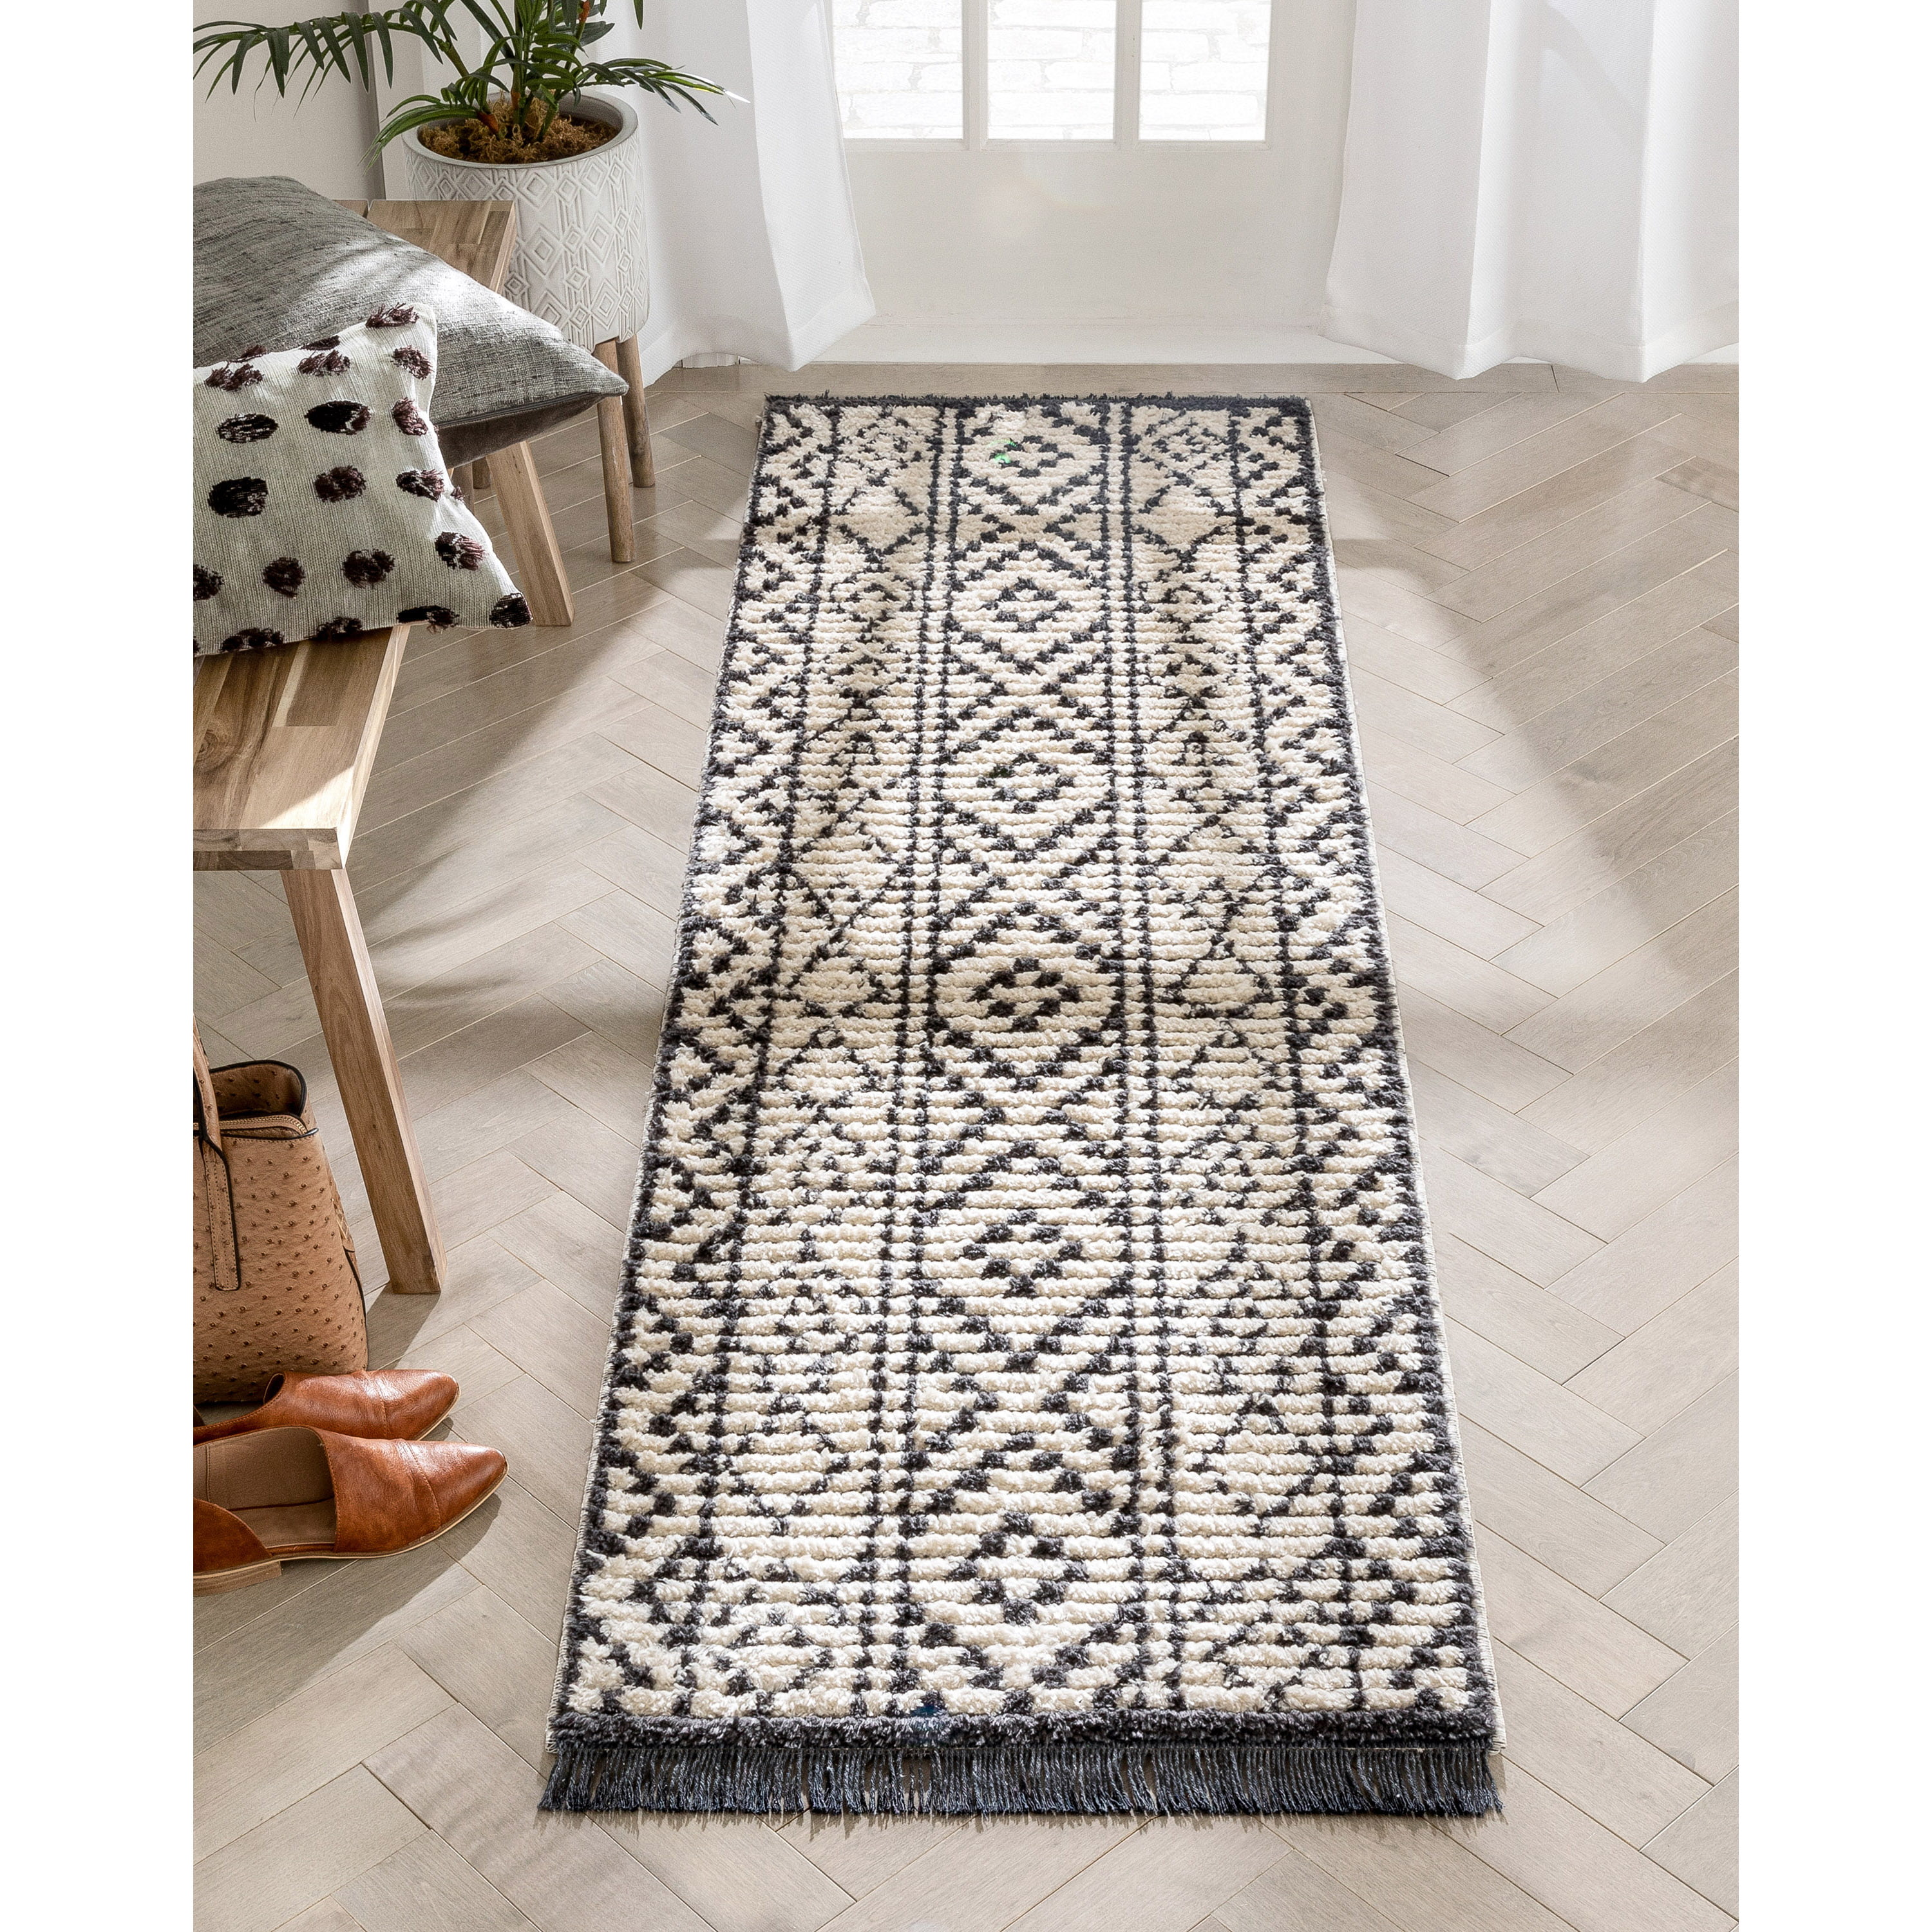 Well Woven Maya Tallulah 2'7 x 9'10 Runner Grey Tribal Moroccan Diamond Pattern Textured Pile Area Rug 